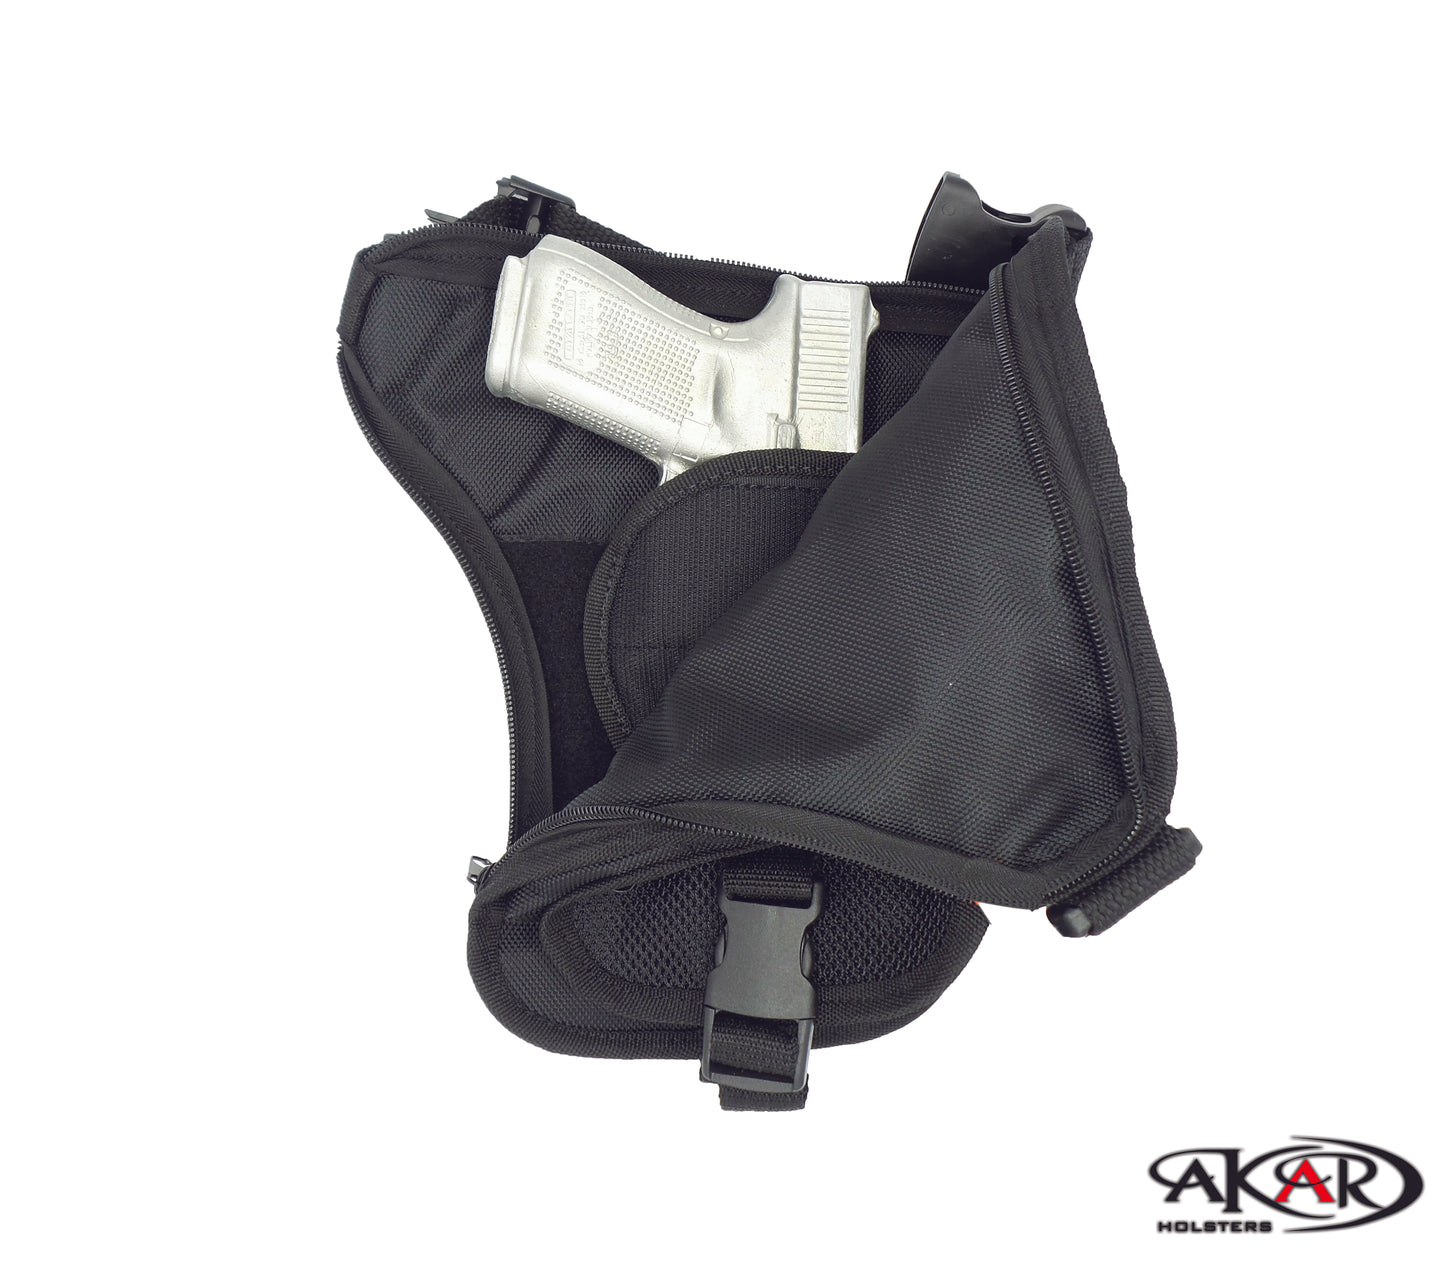 (WSP) Multi Functional Advanced Tactical Shoulder/ Waist Bag for Concealed Gun Carry-Fanny Pack